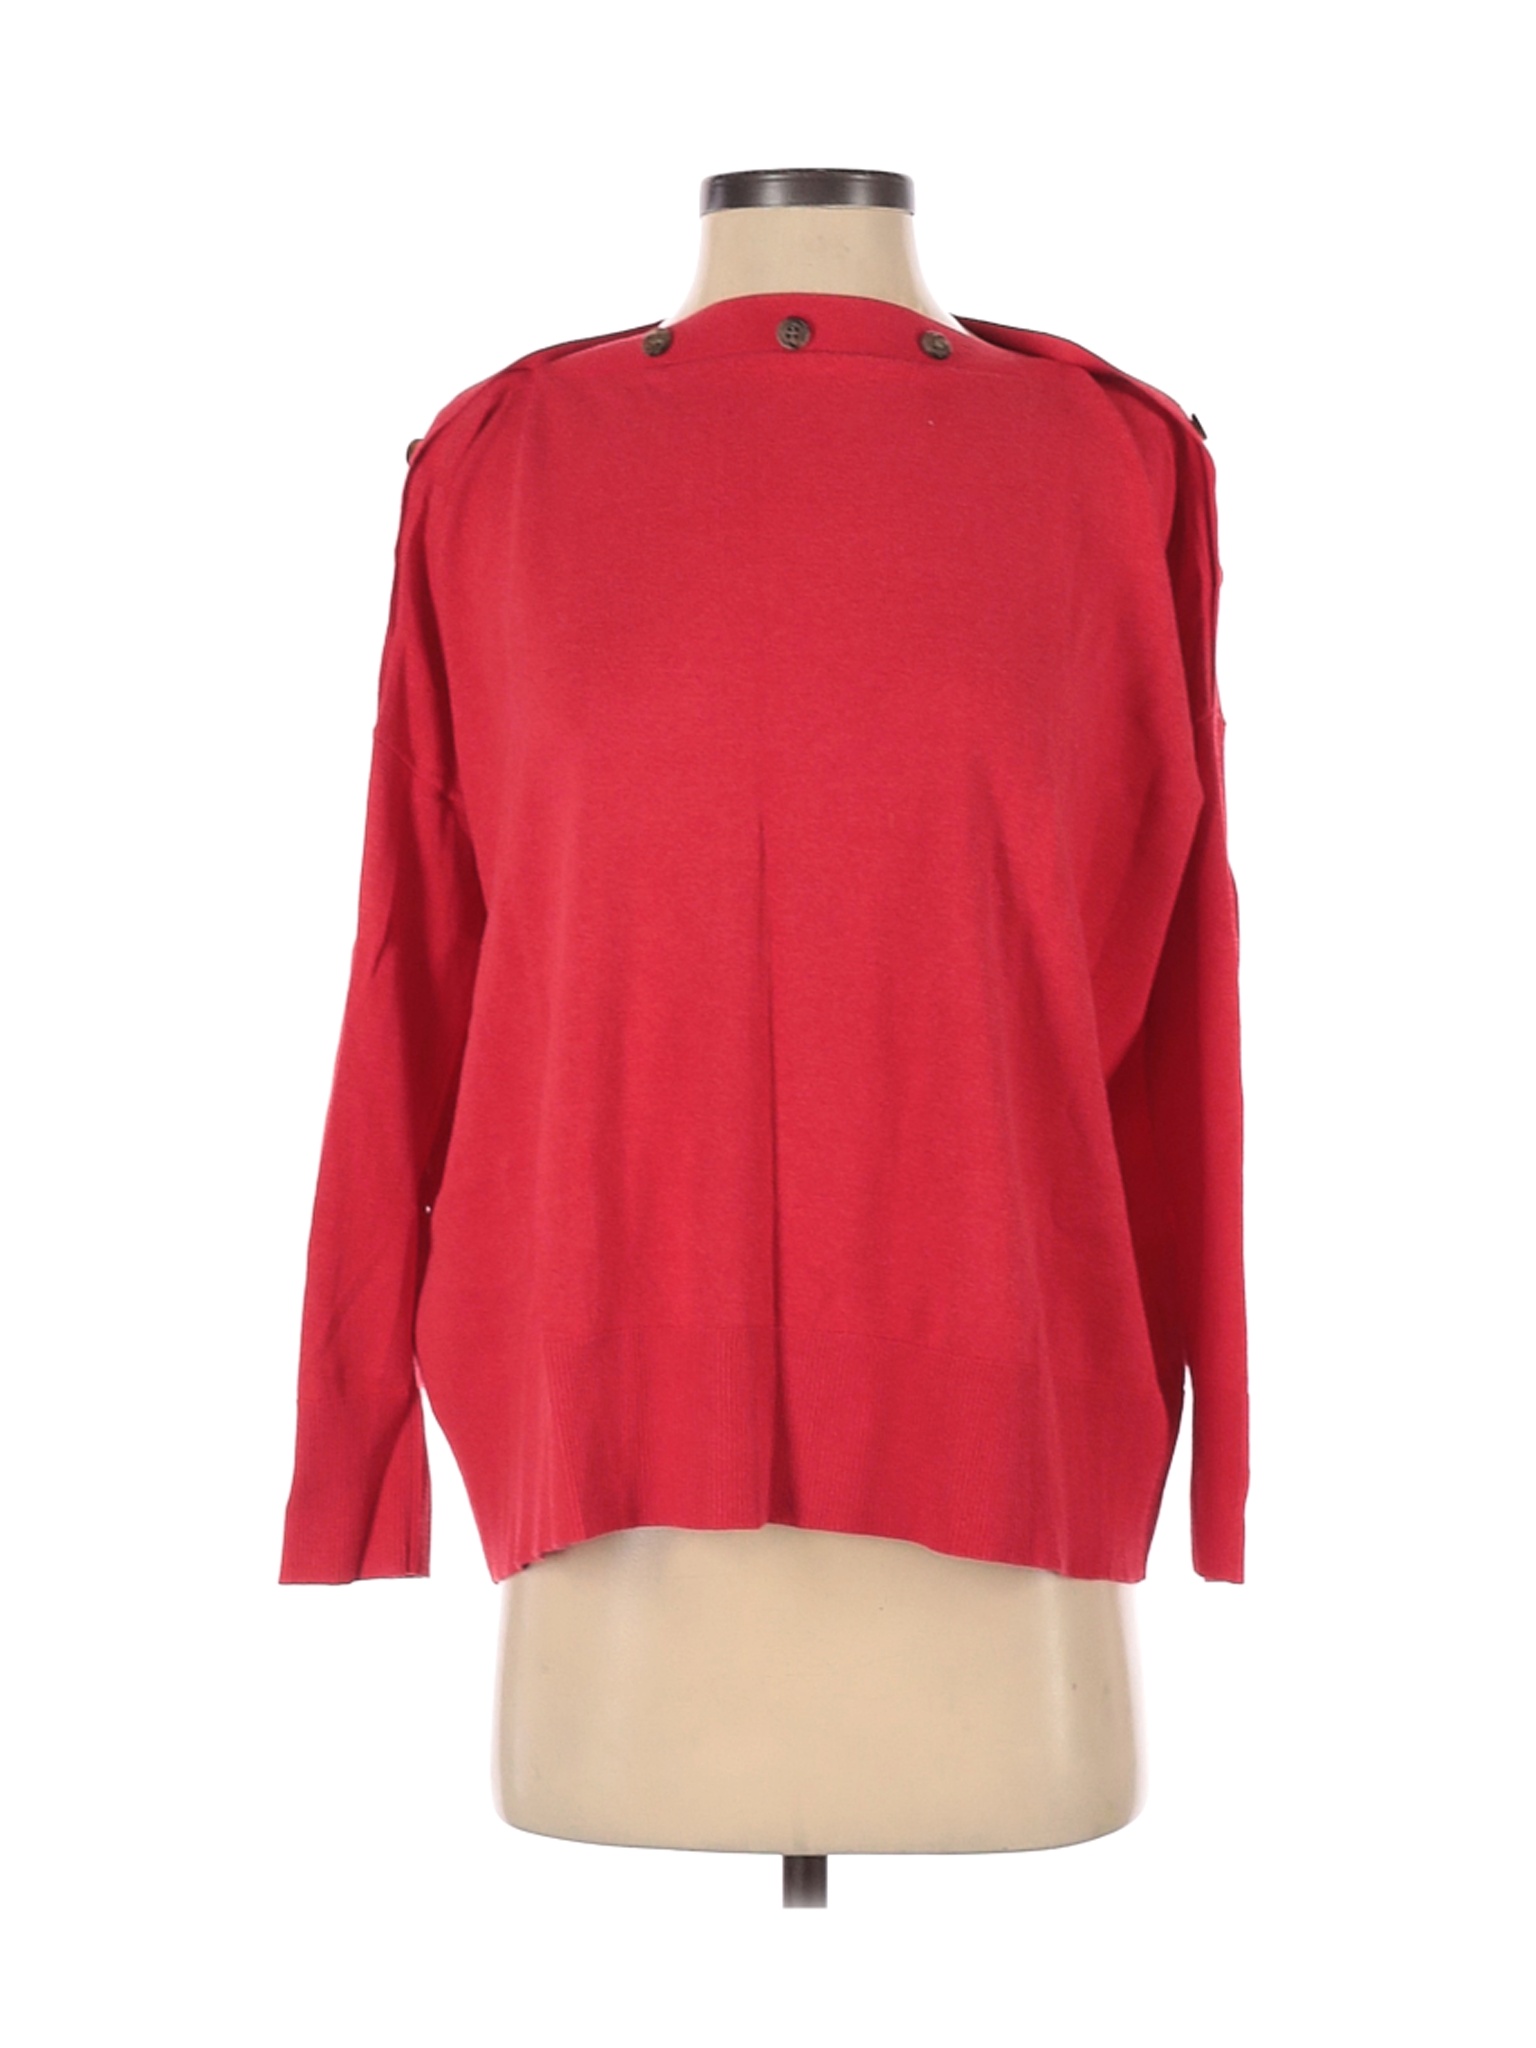 J.Crew Women Red Pullover Sweater S | eBay